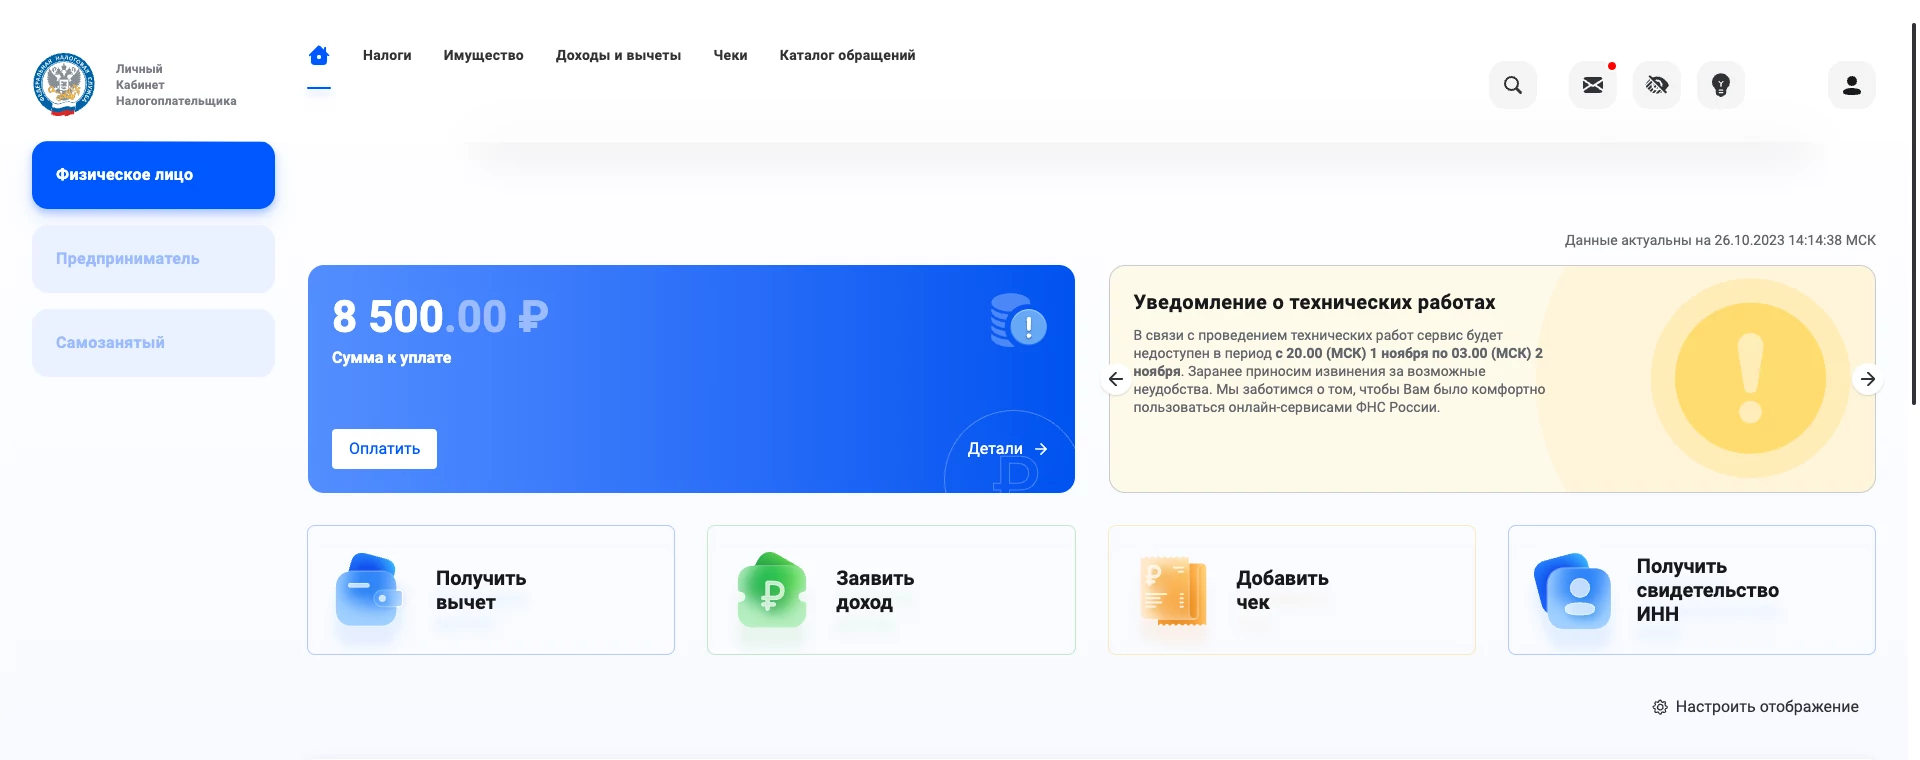 проверка задолженностей на сайте налог.ру